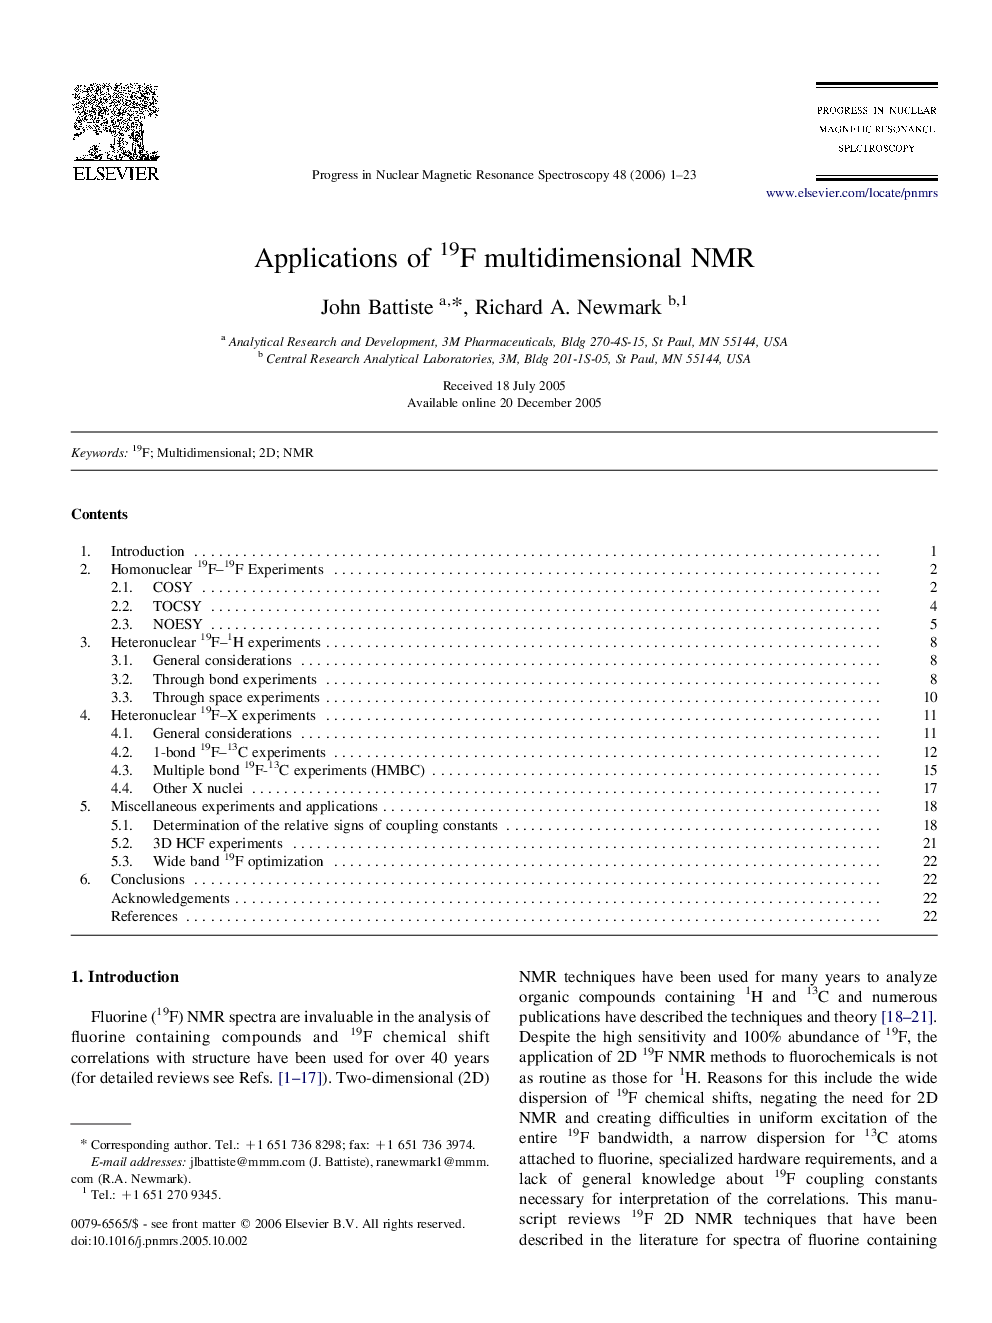 Applications of 19F multidimensional NMR